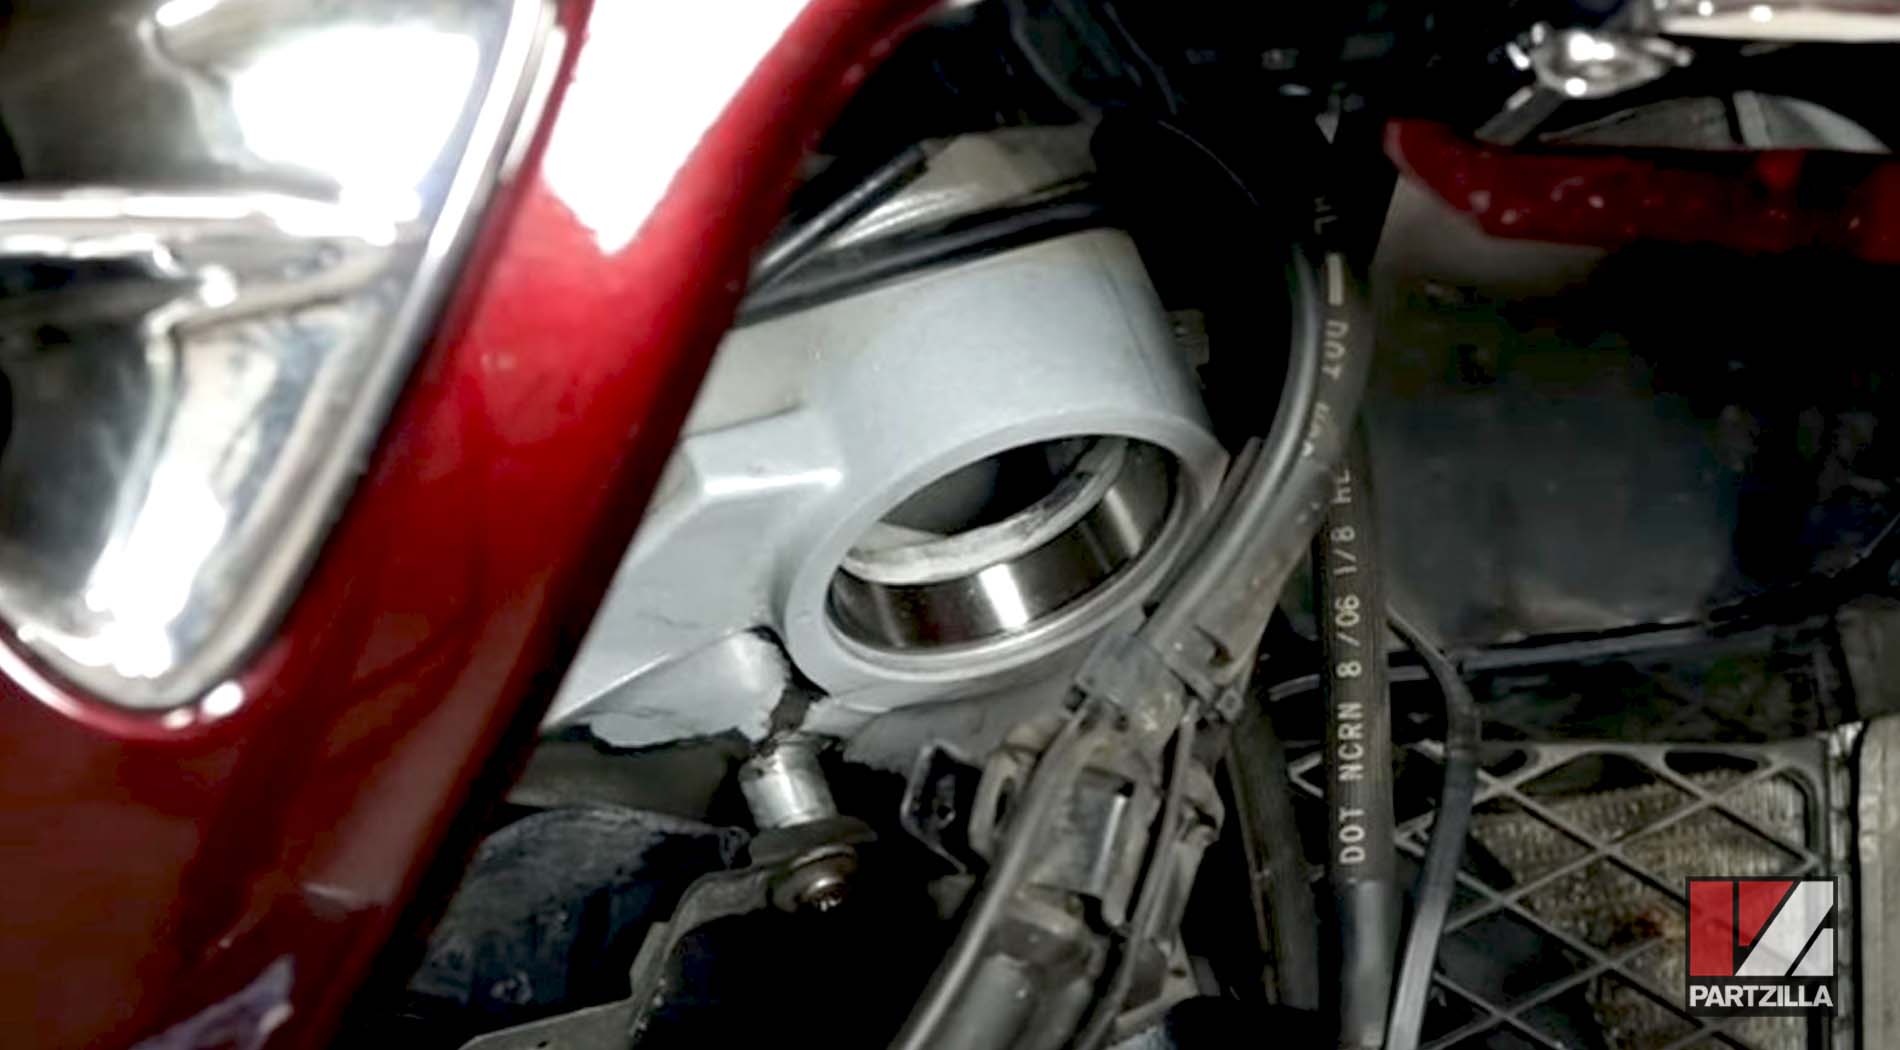 Honda Goldwing steering stem bearing replacement new bearing race install